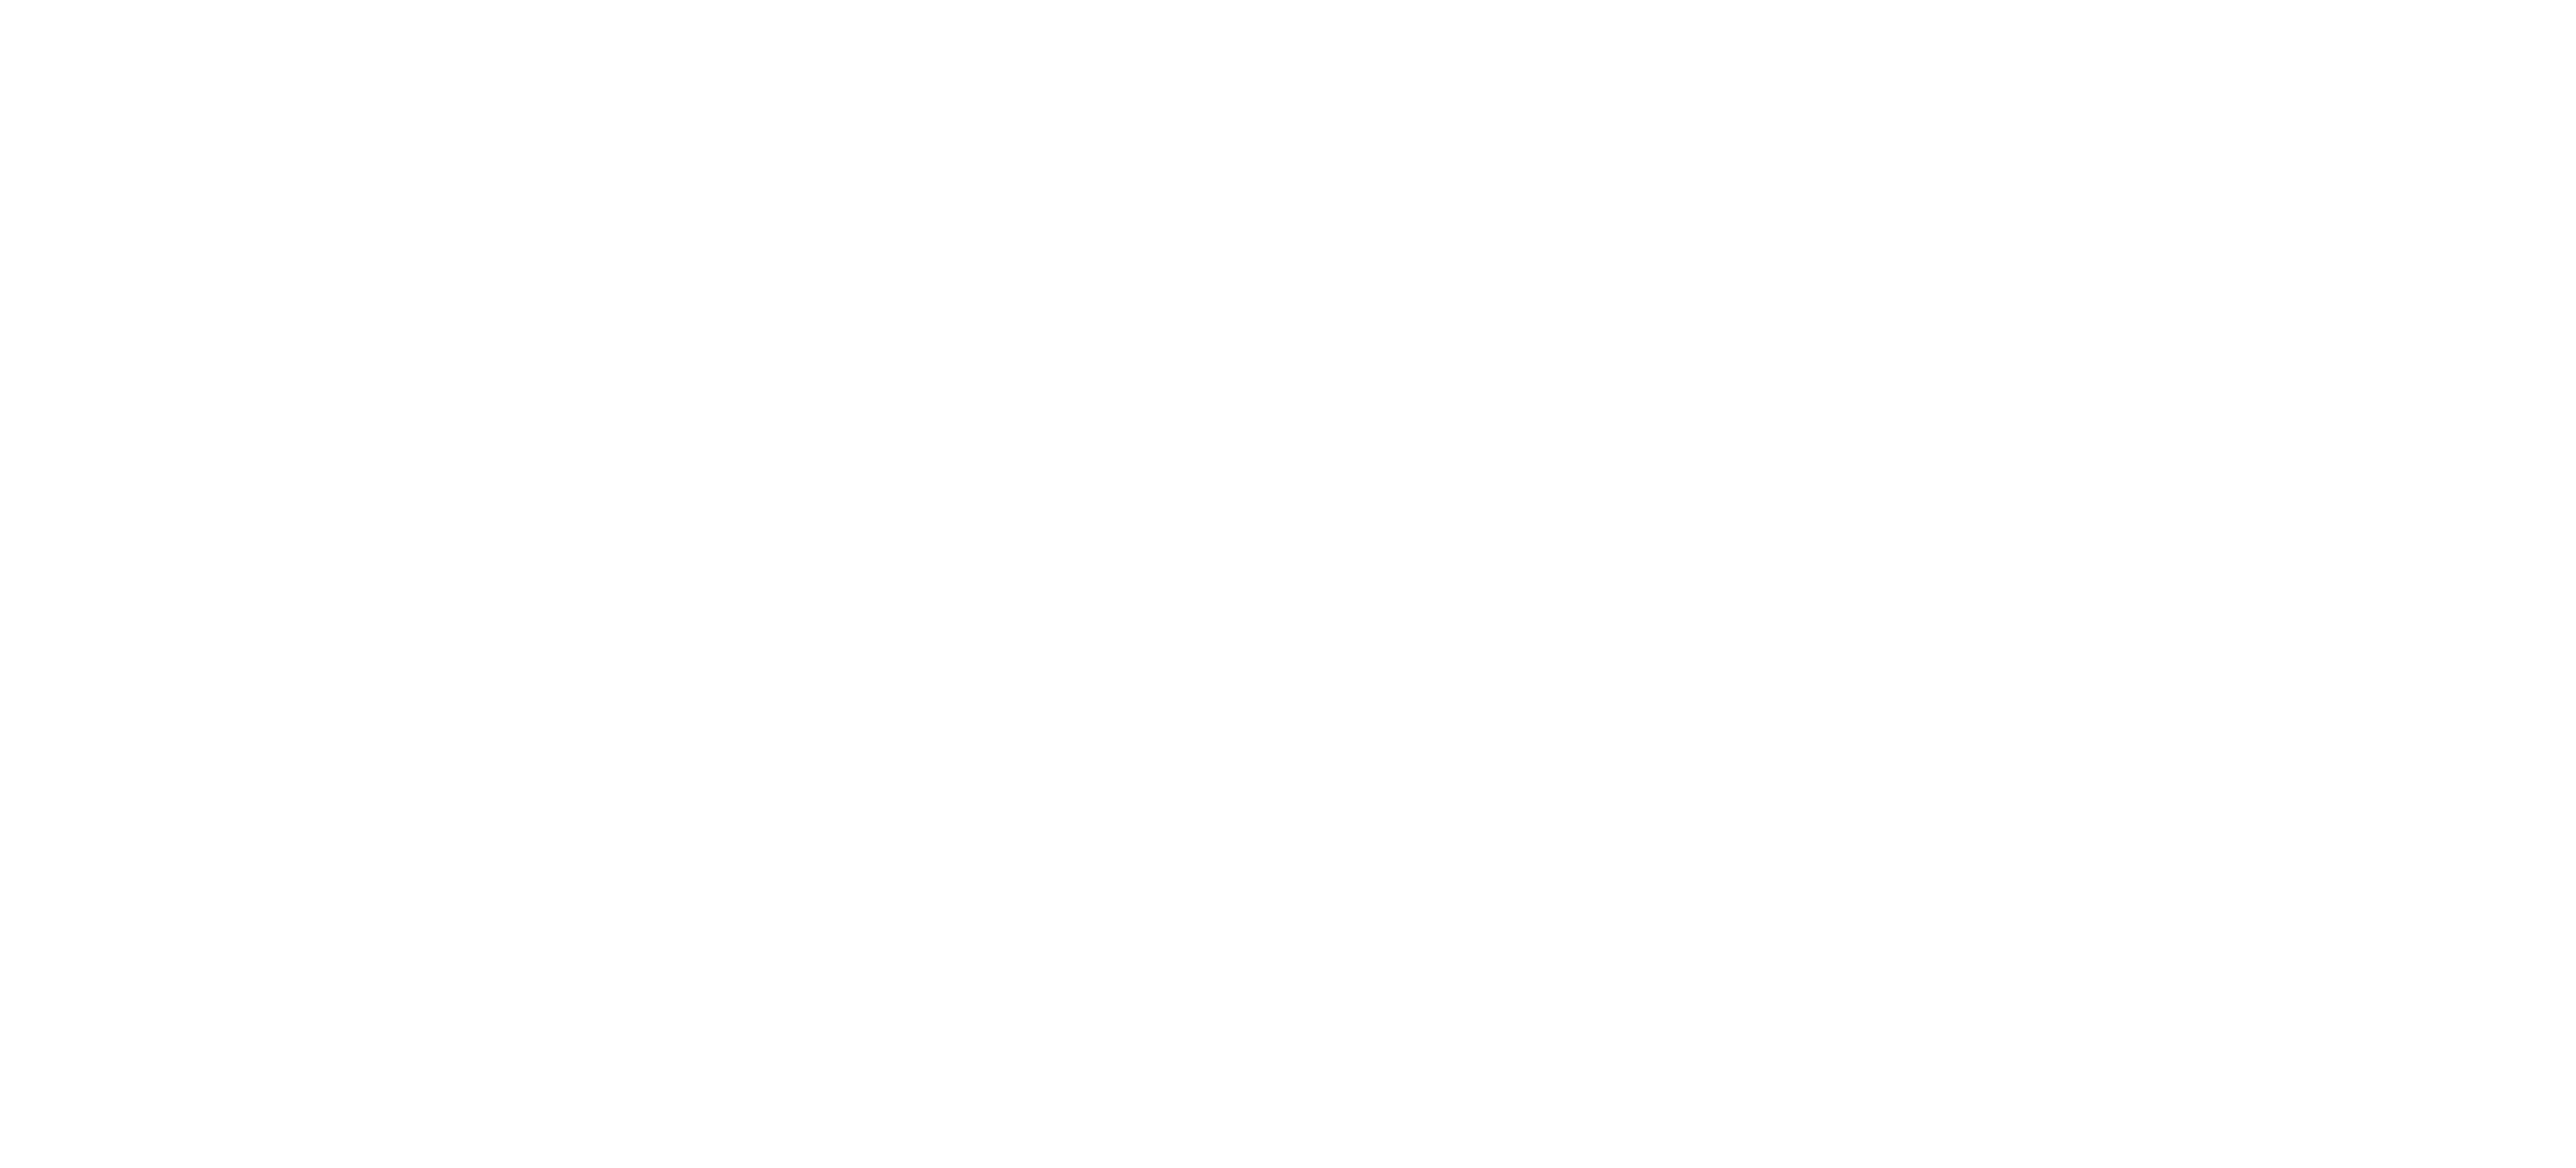 iGear